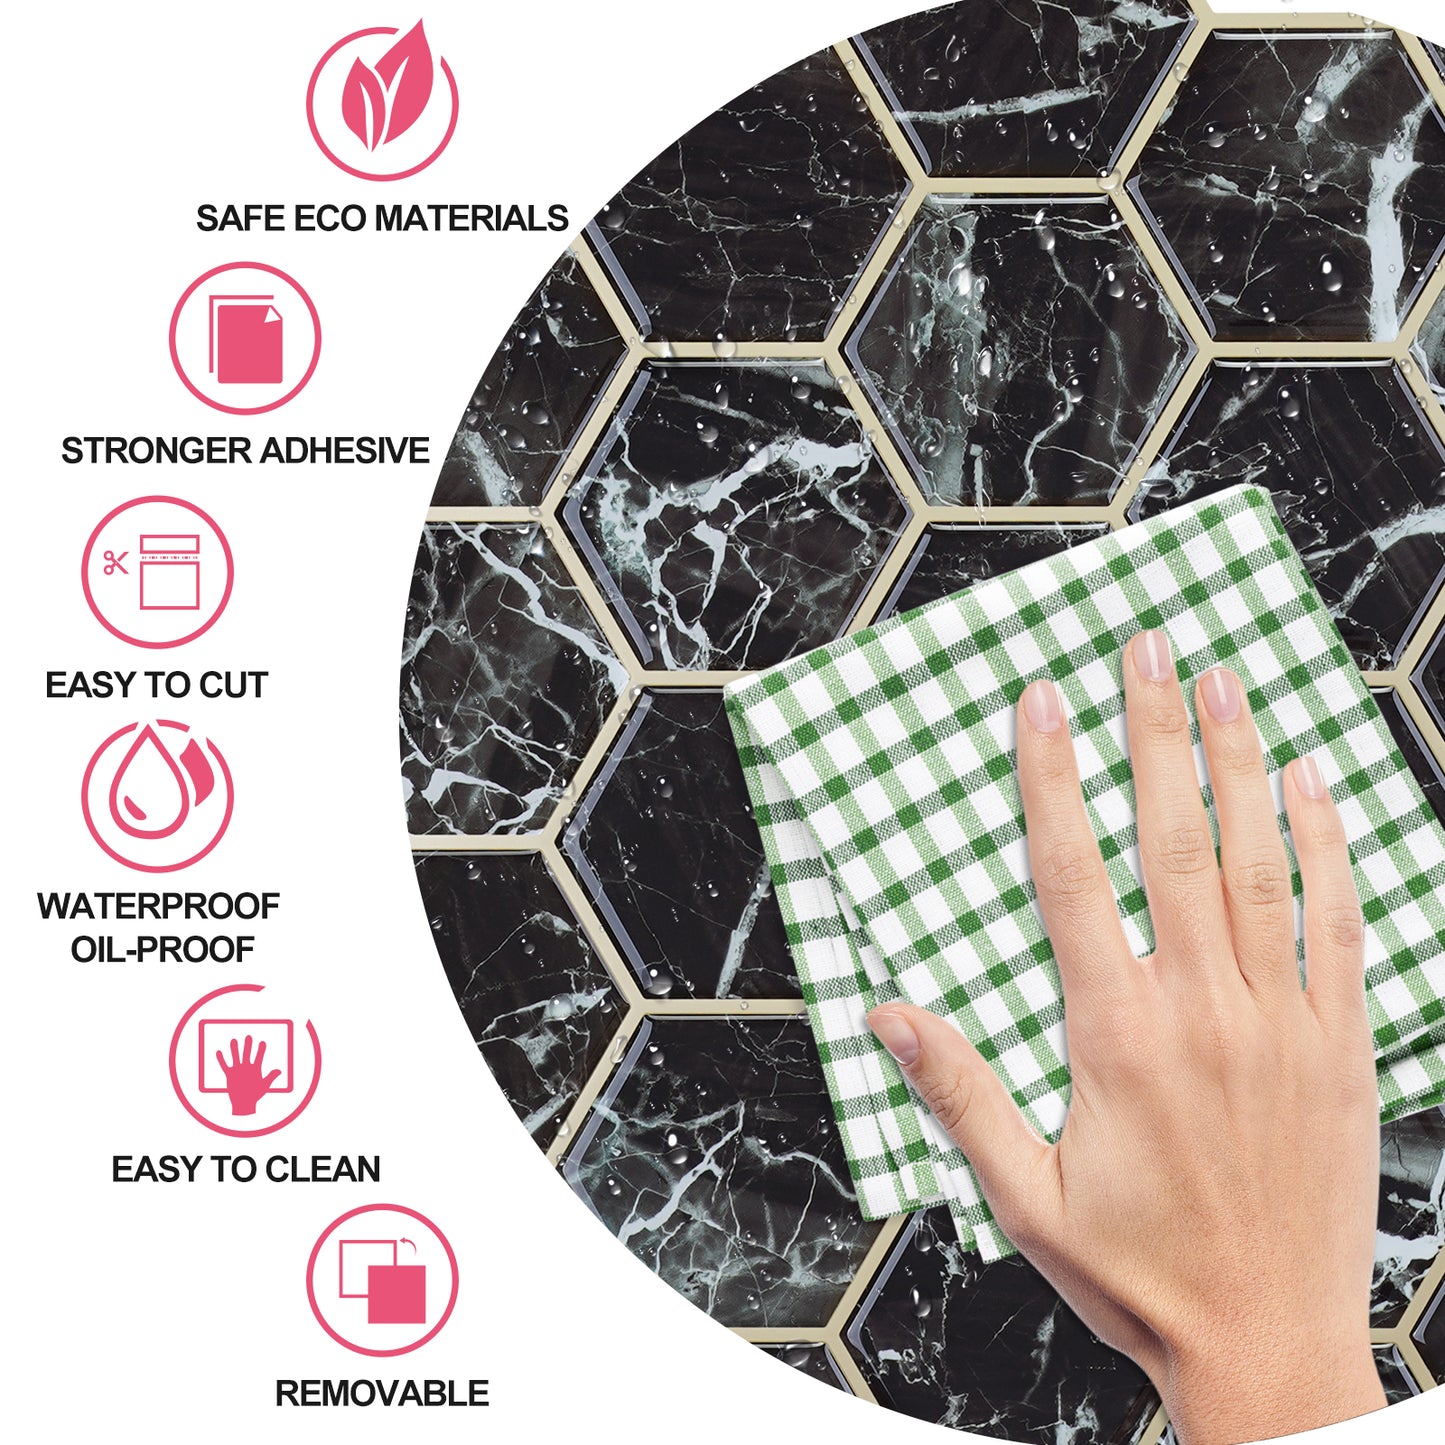 MT1207 - Black Marble Hexagon Decals Peel And Stick Backsplash Tile , 12" x 12" White Tile